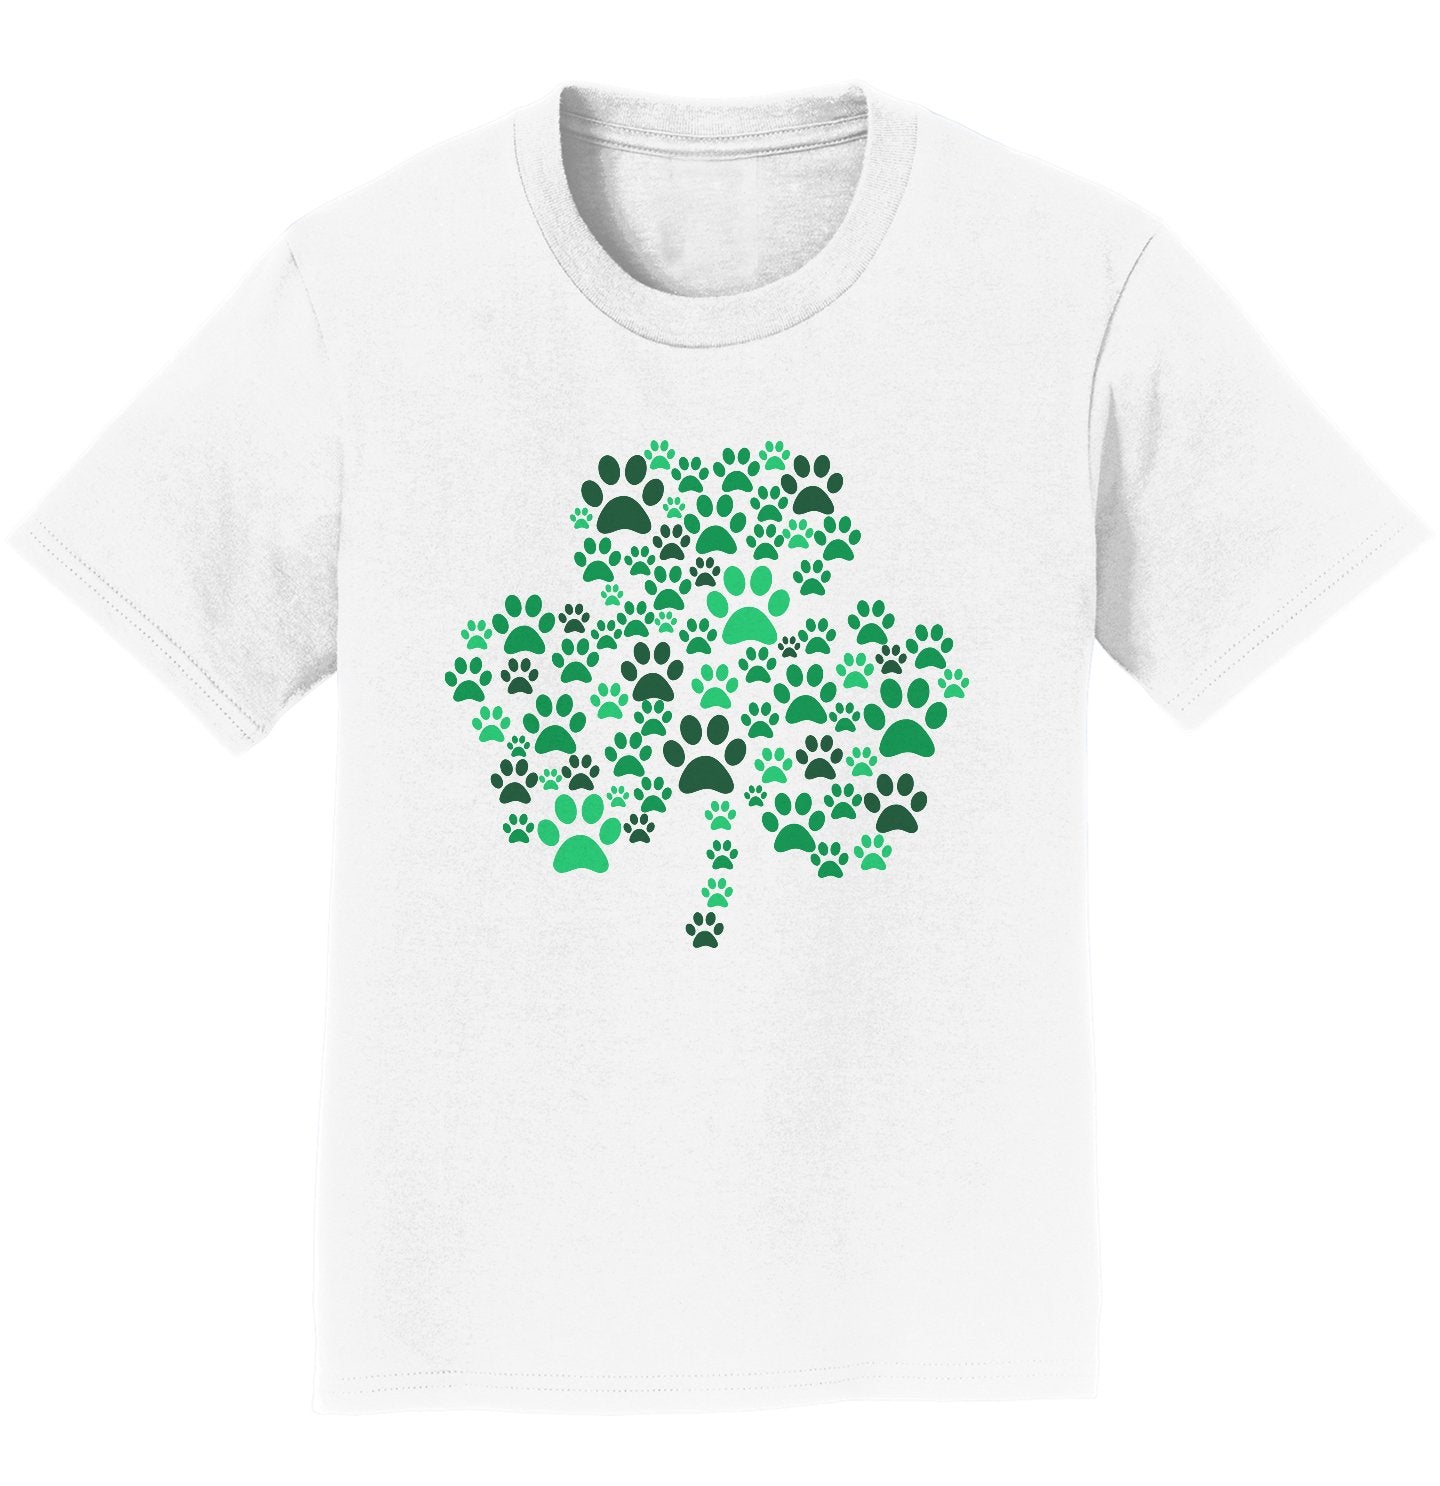 Green Paw Shamrock - Kids' Unisex T-Shirt